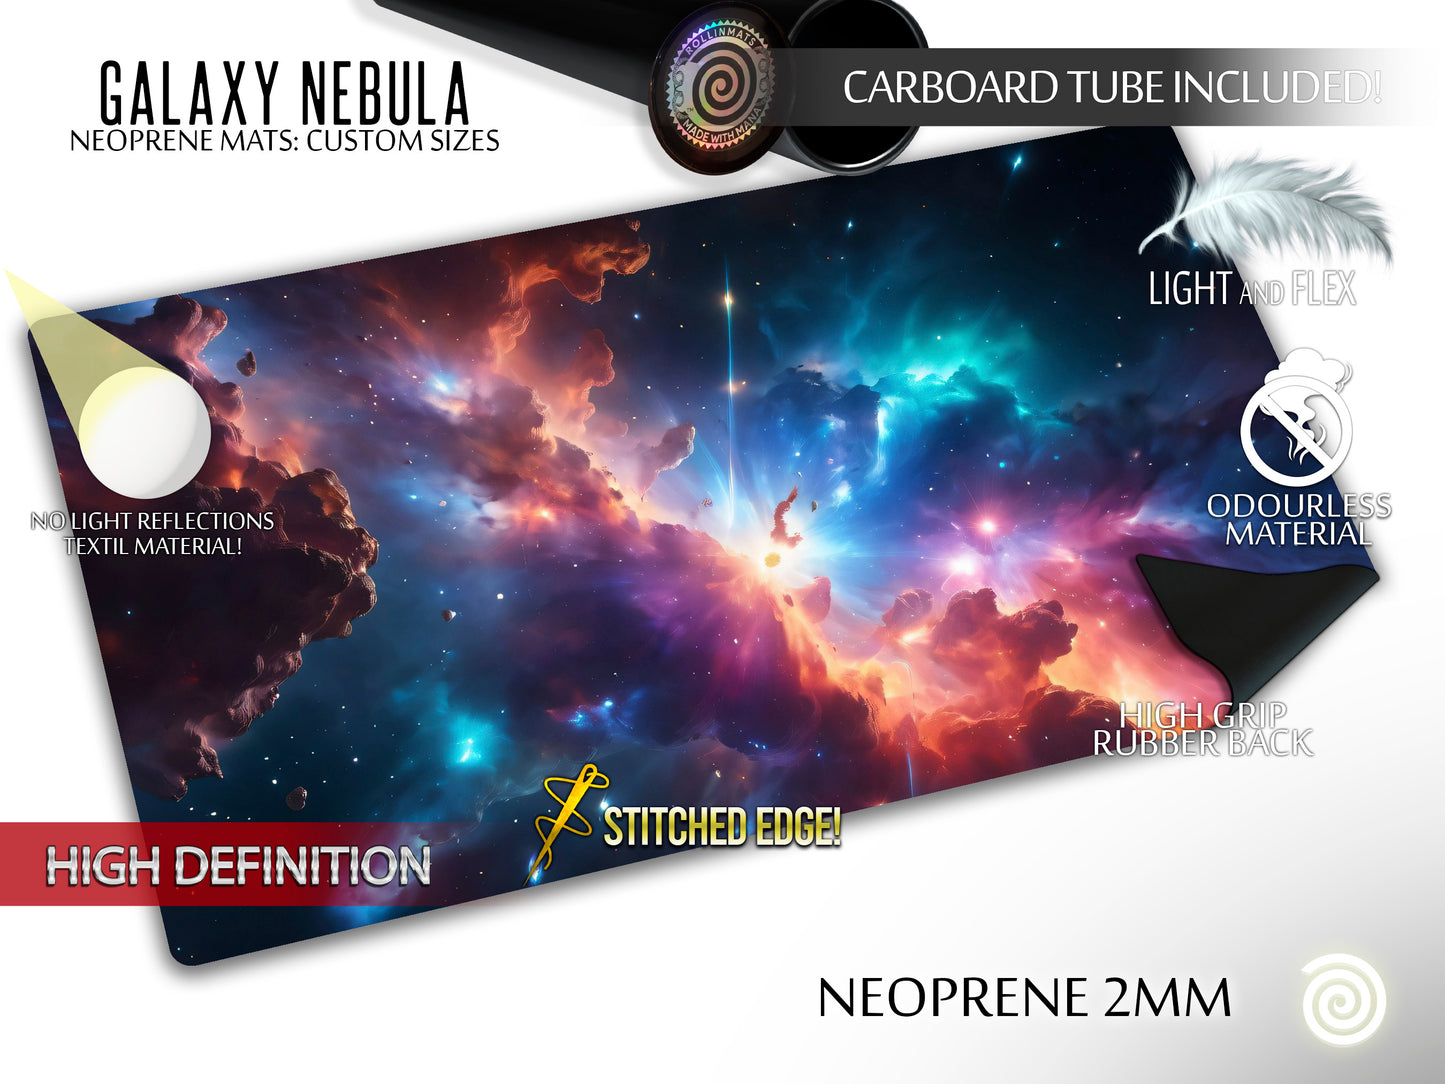 Galaxy Nebula 3  Neoprene mats Custom Sizes